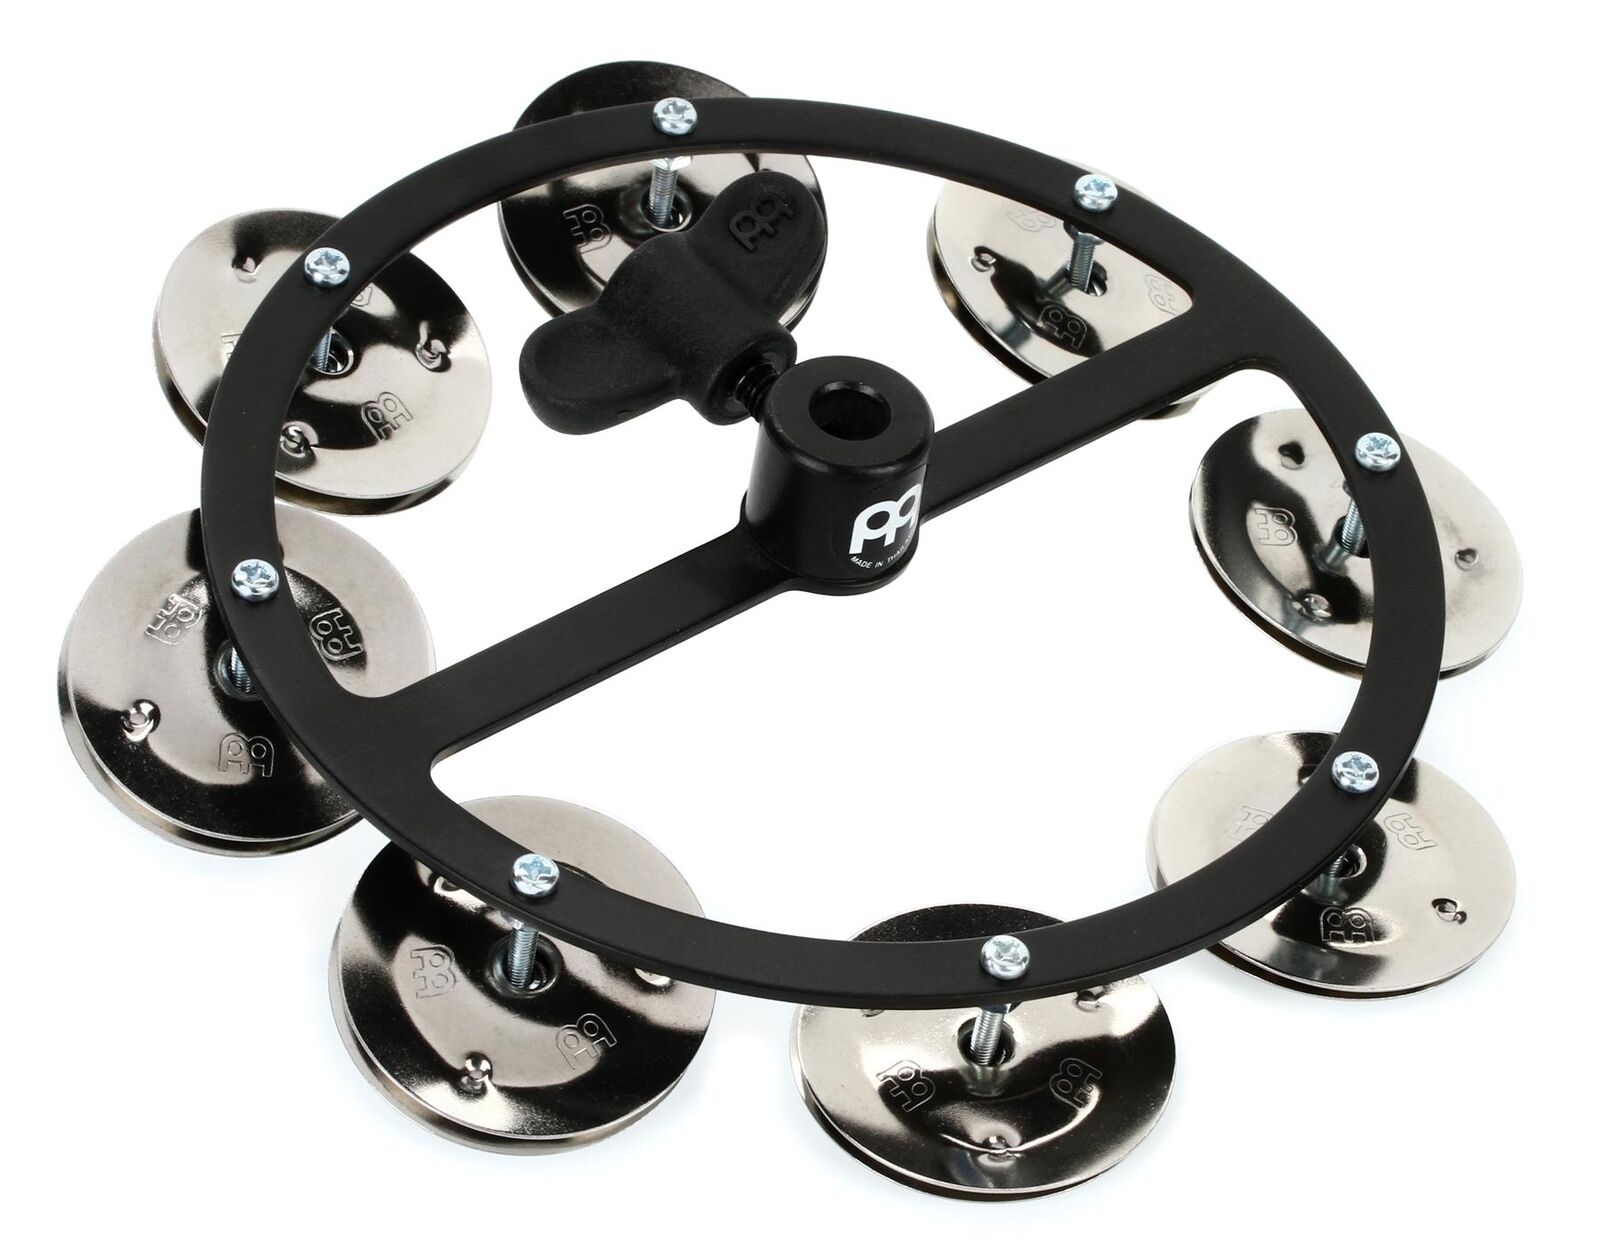 Meinl Percussion Headliner Series Hi-Hat Tambourine - Black (3-pack) Bundle